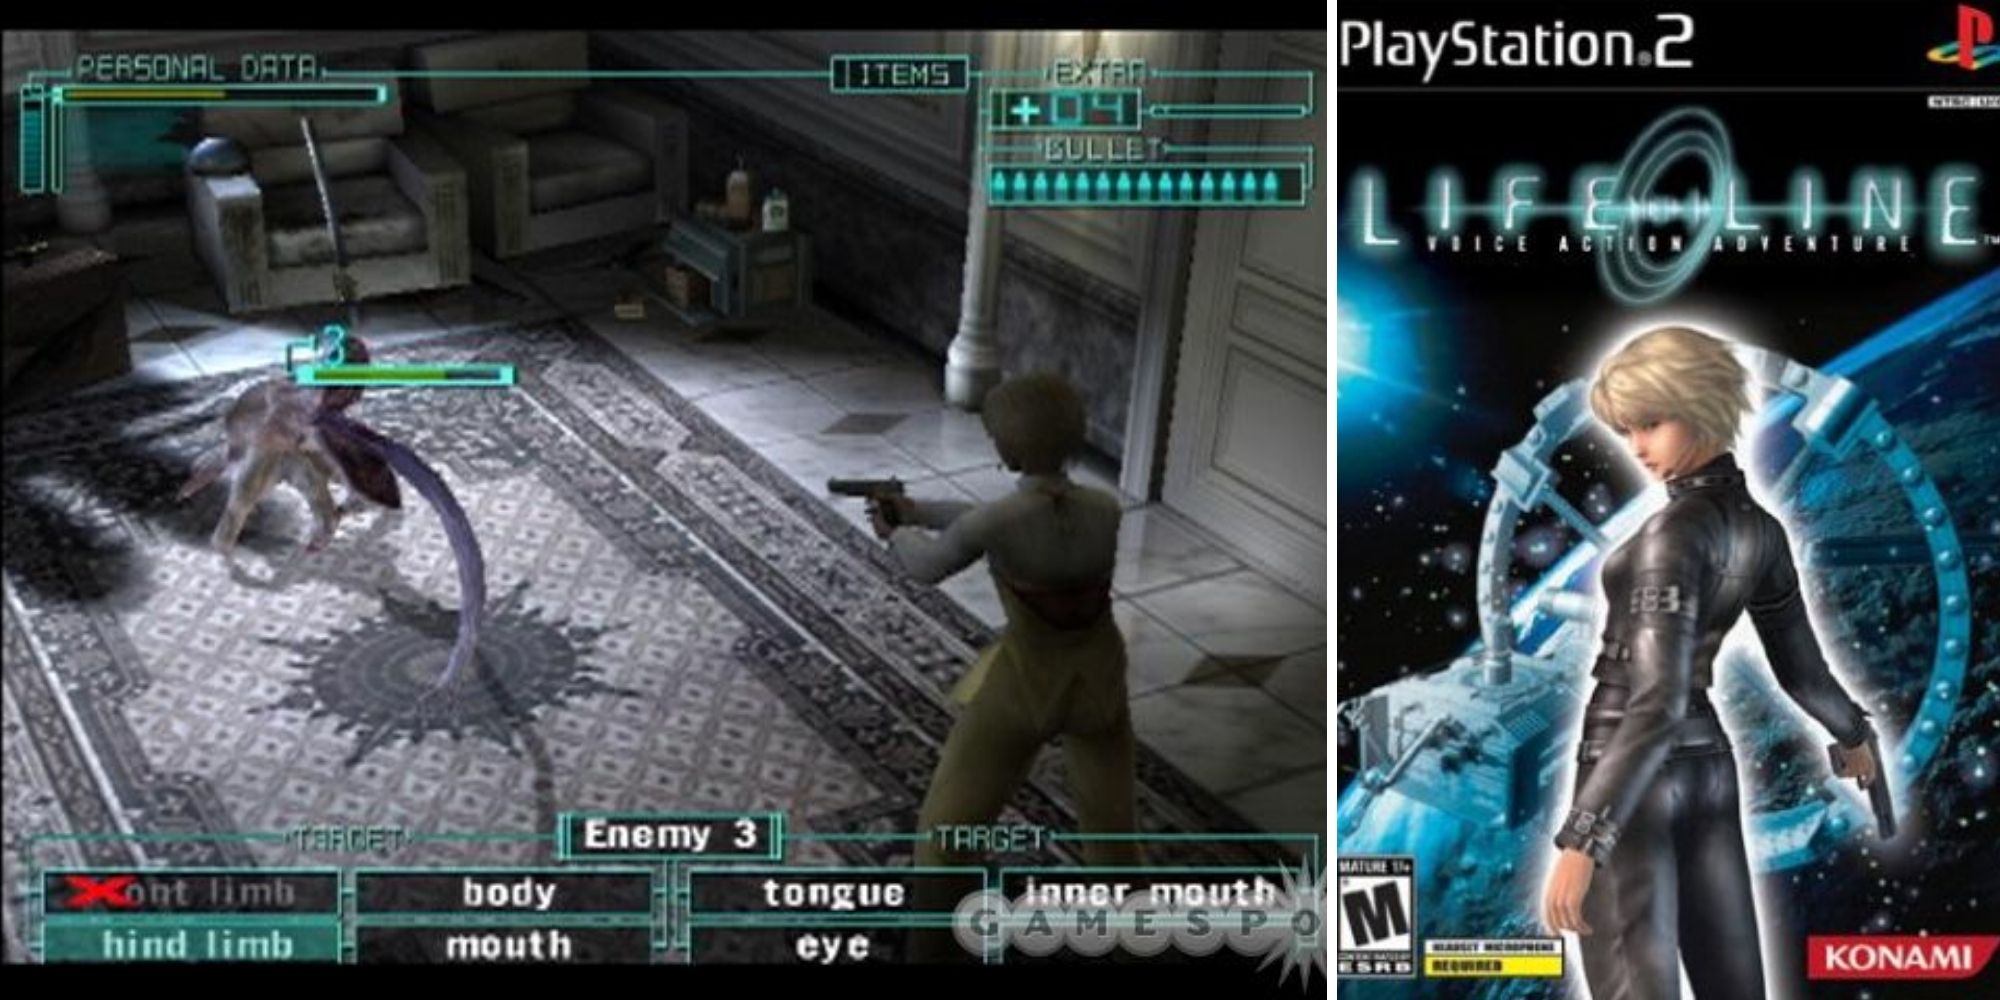 Lifeline gameplay and PlayStation 2 box art